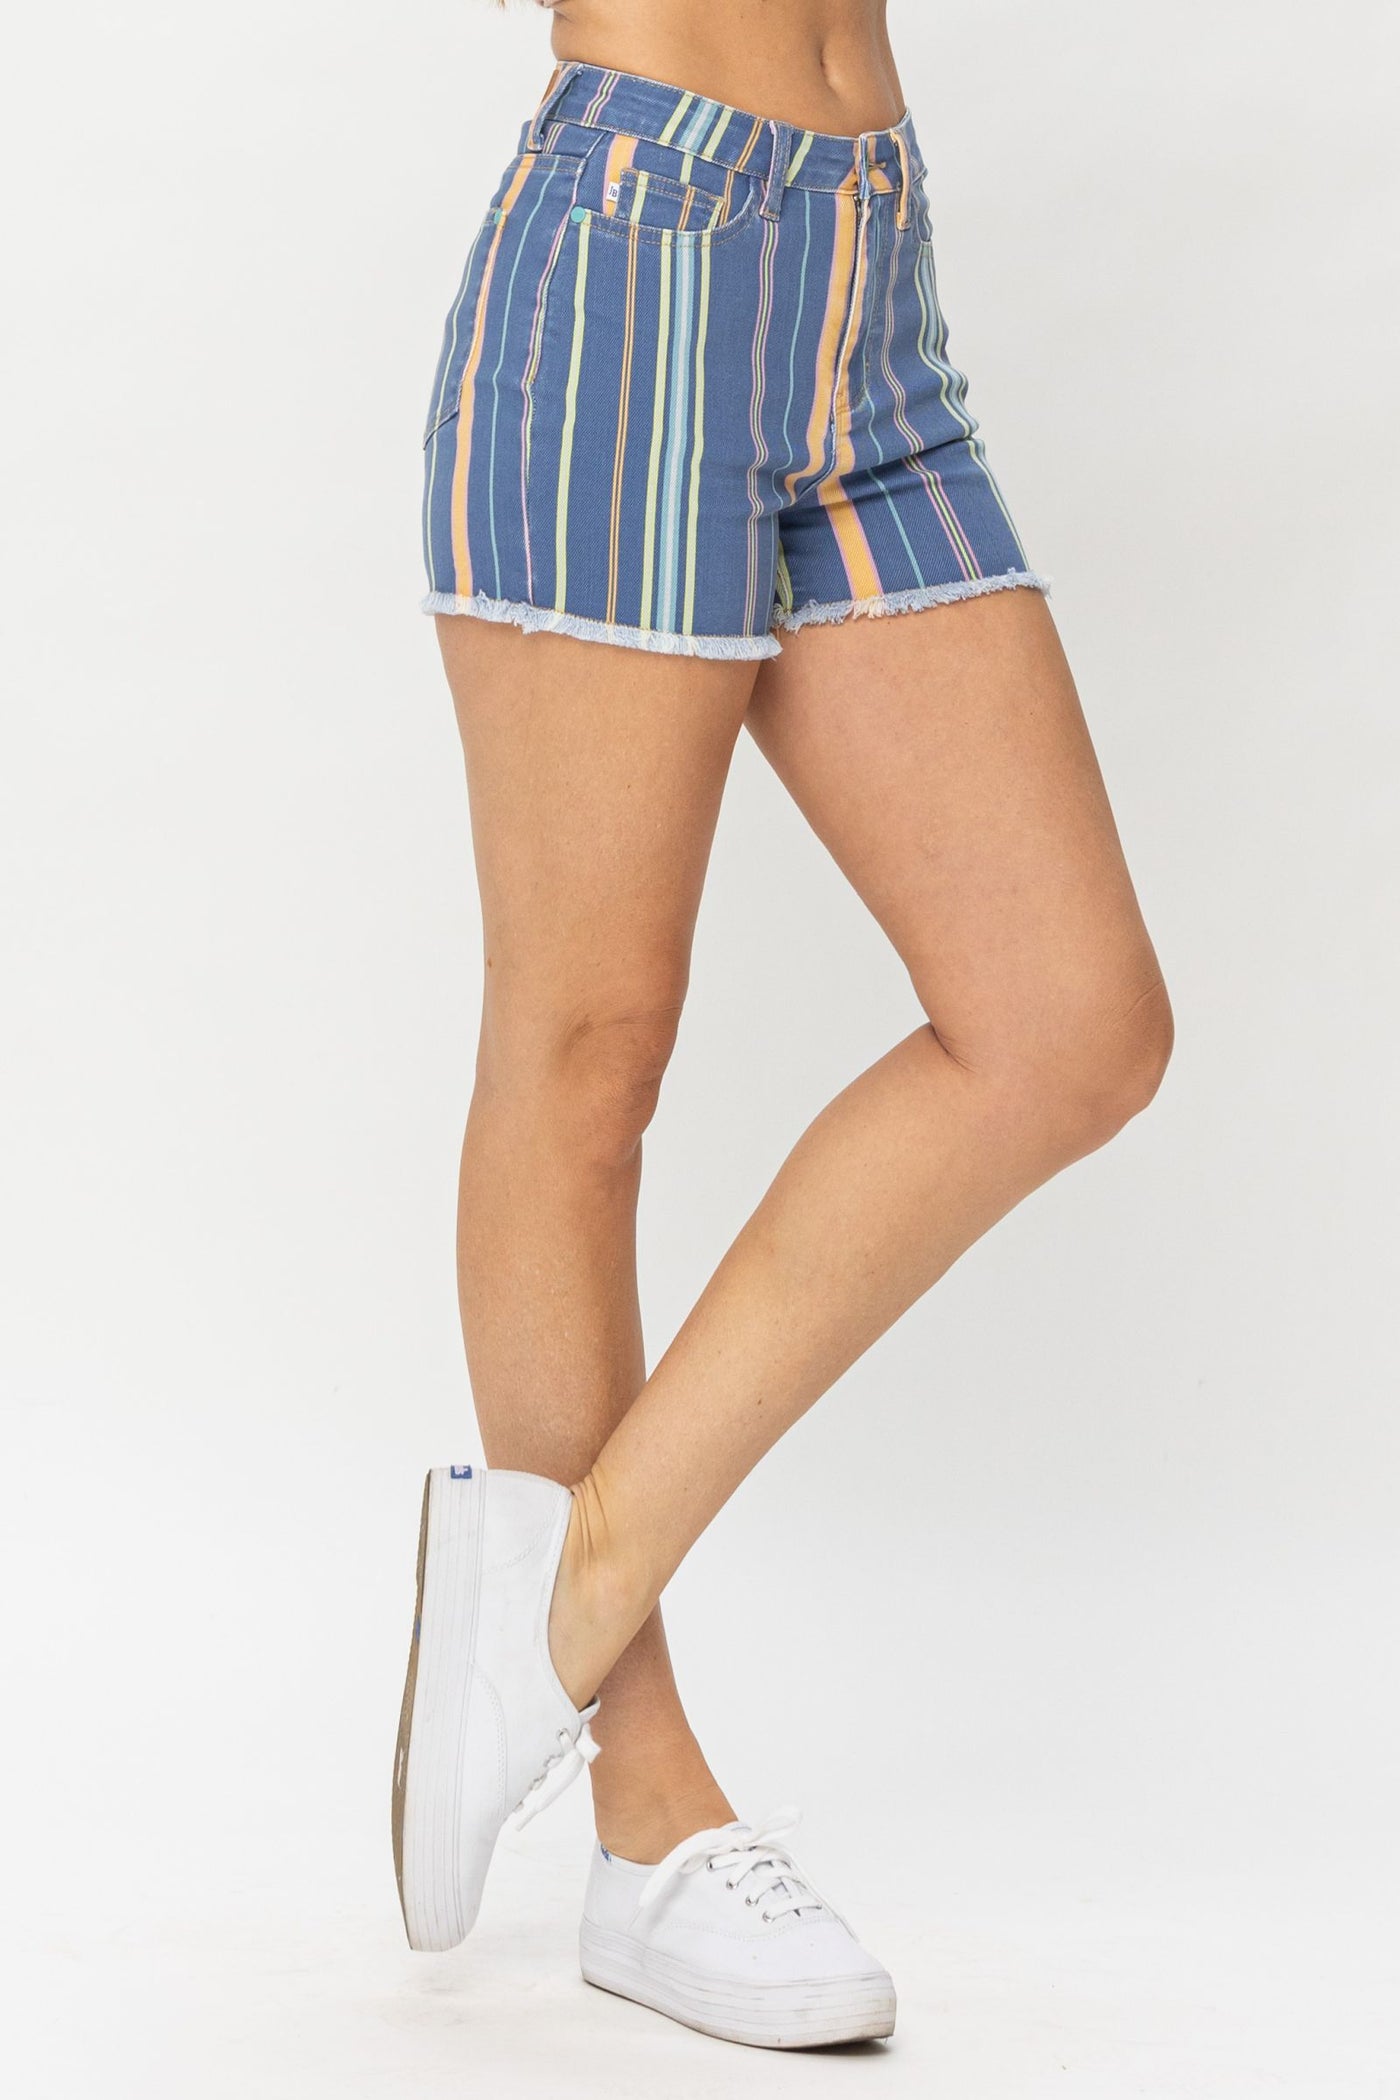 Judy Blue Peach Sunrise Striped Denim Shorts